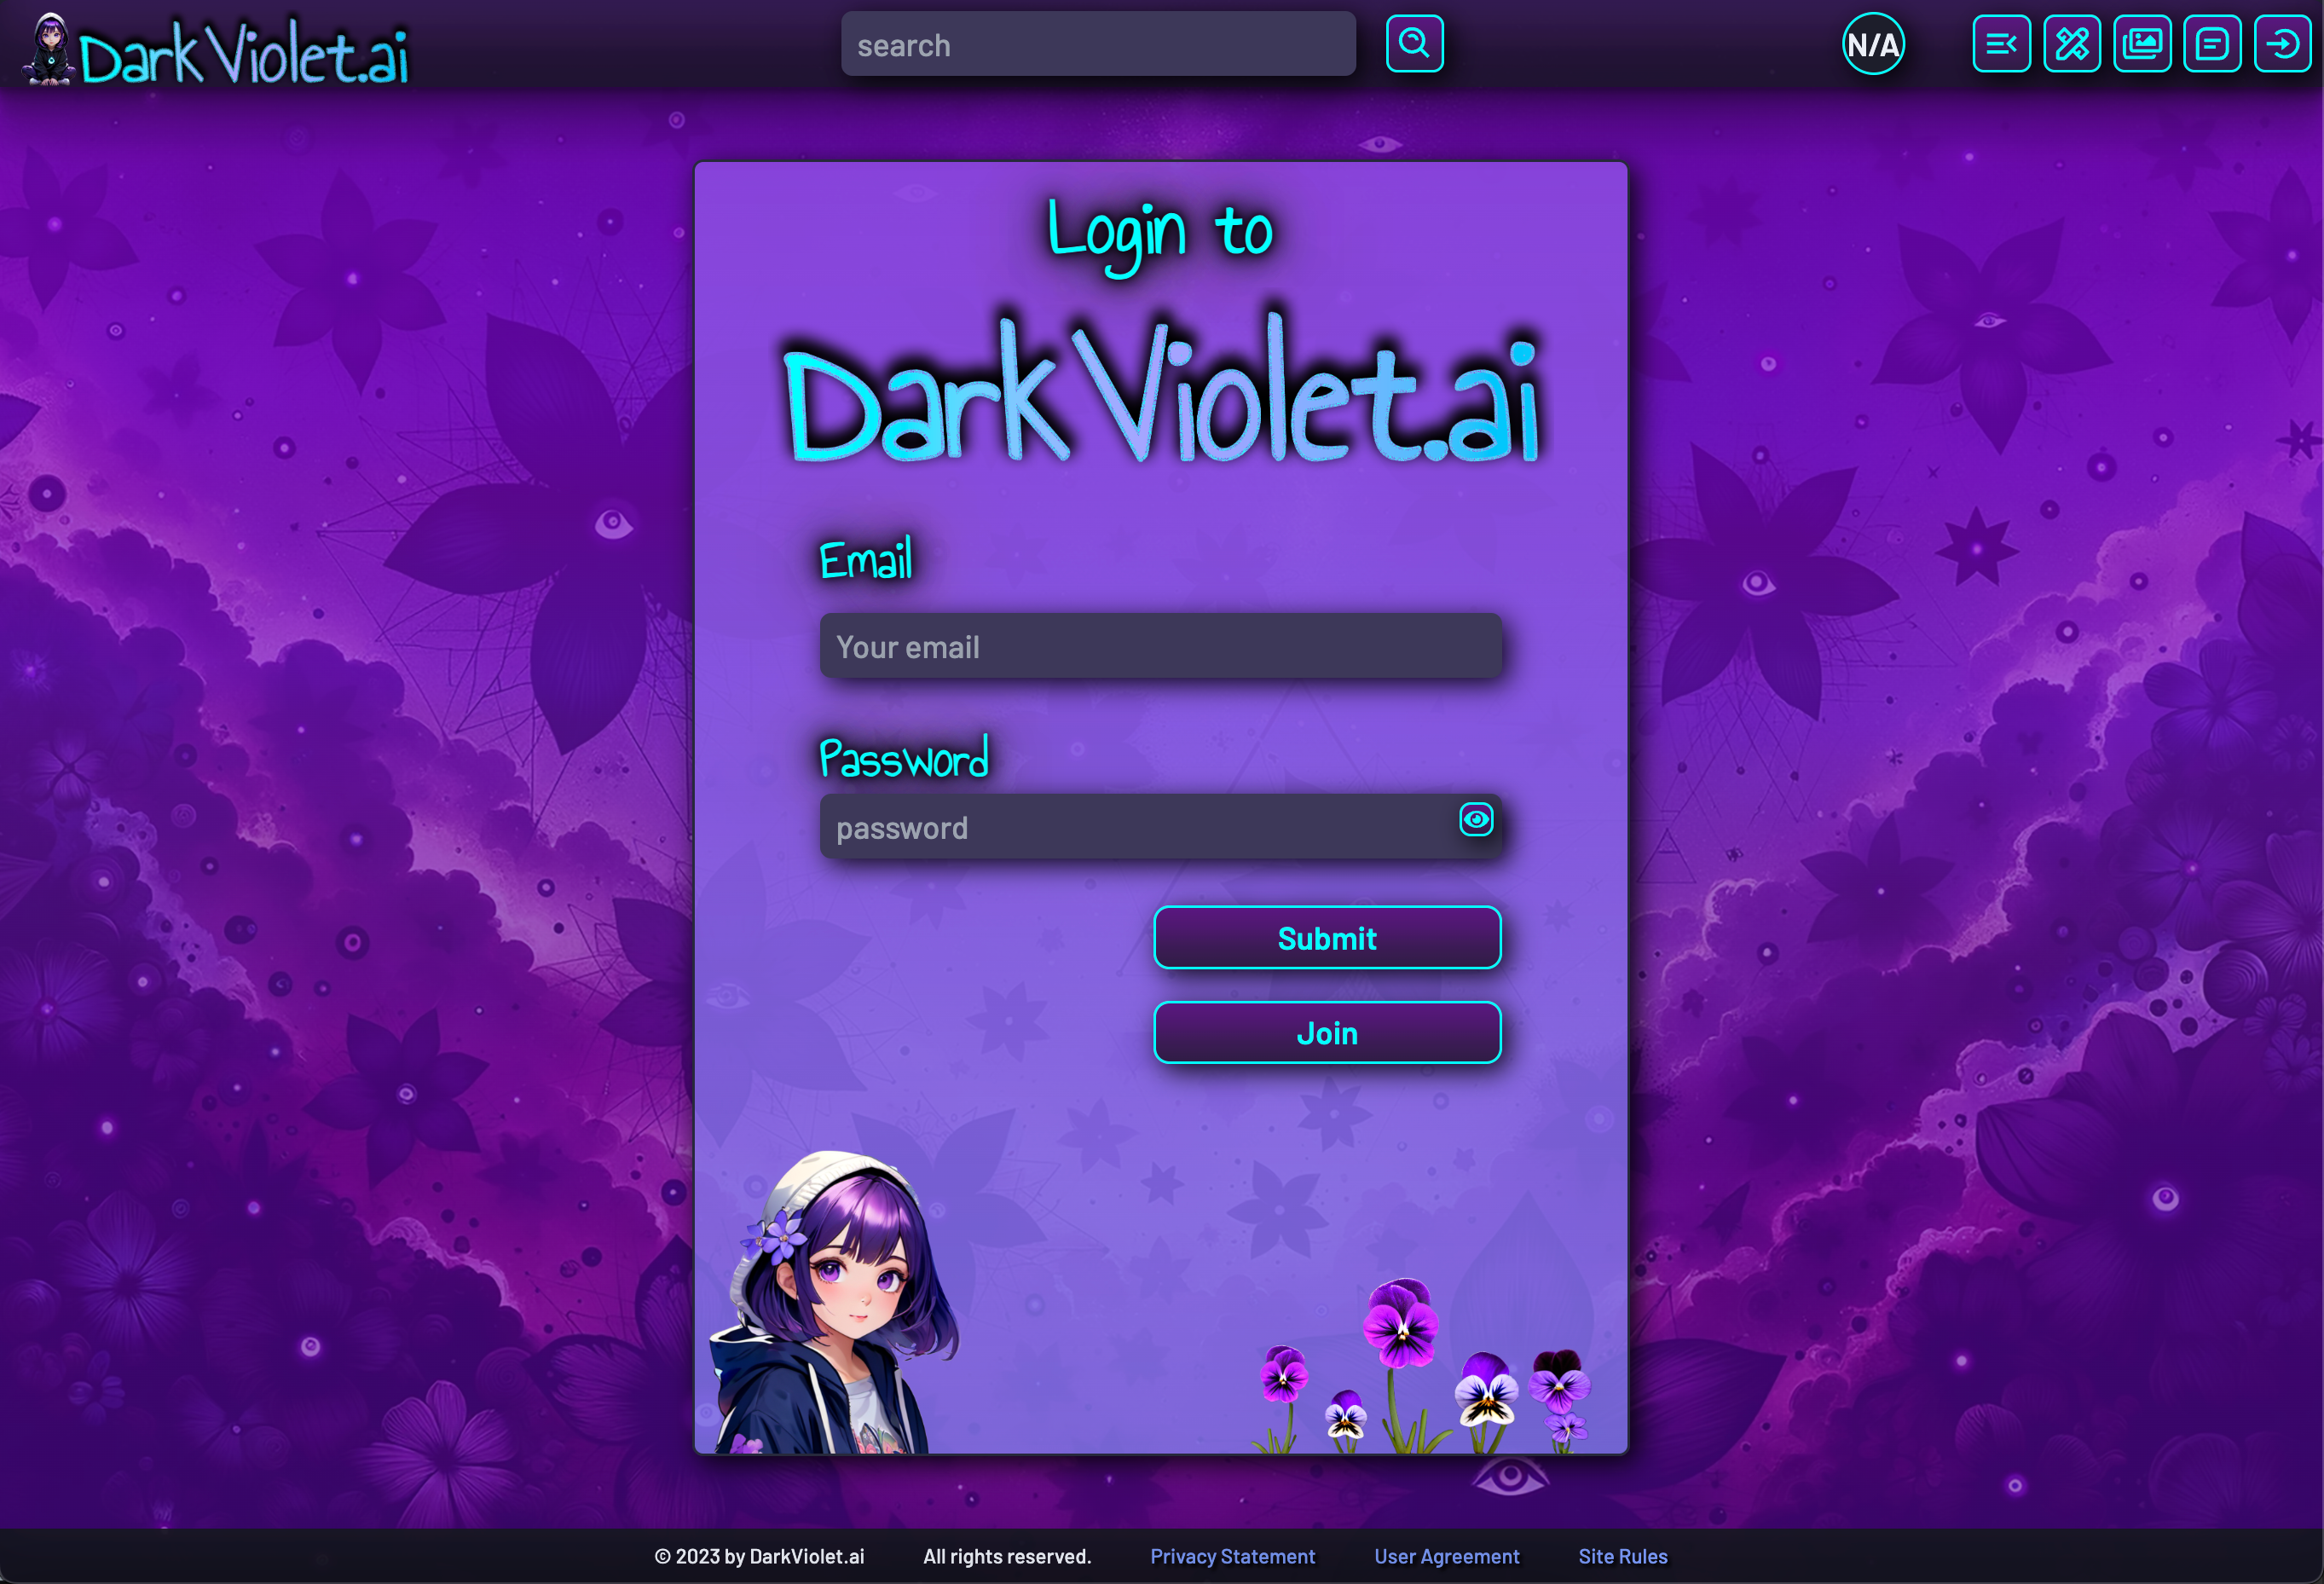 Dark Violet: Art - Login